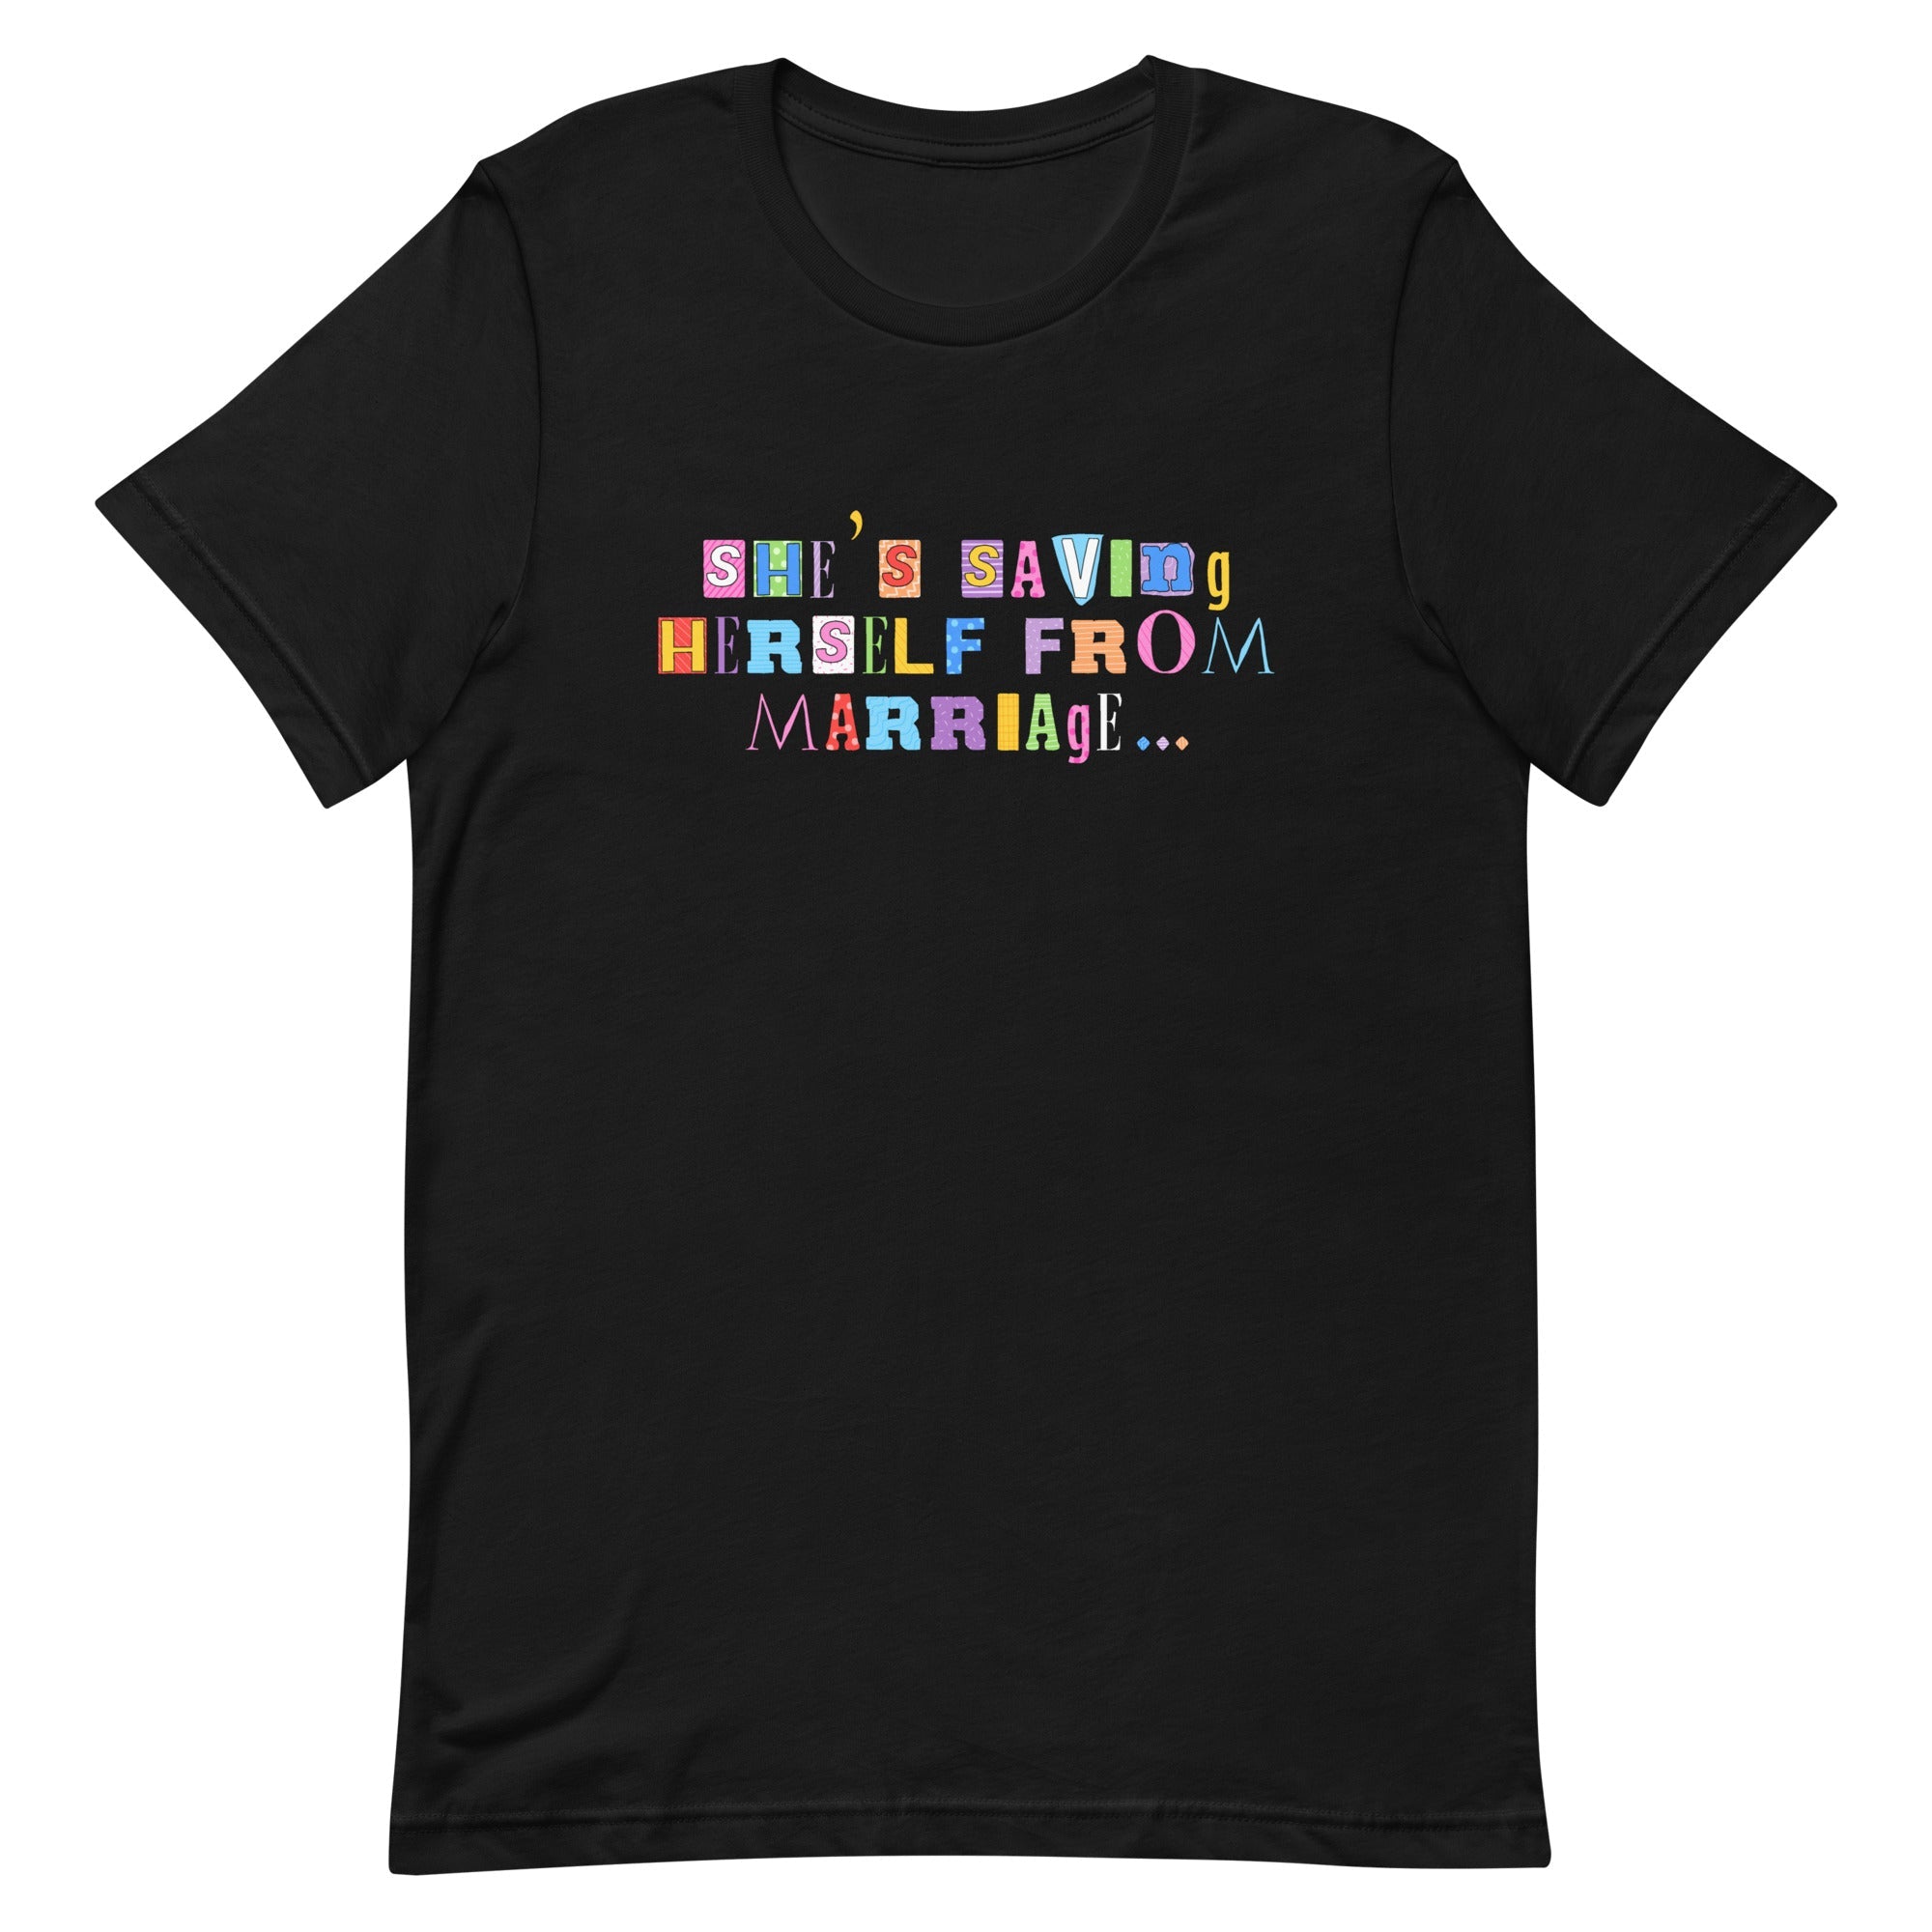 saving-herself-from-marriage-black-feminist-shirt- Women's Rights T-shirt